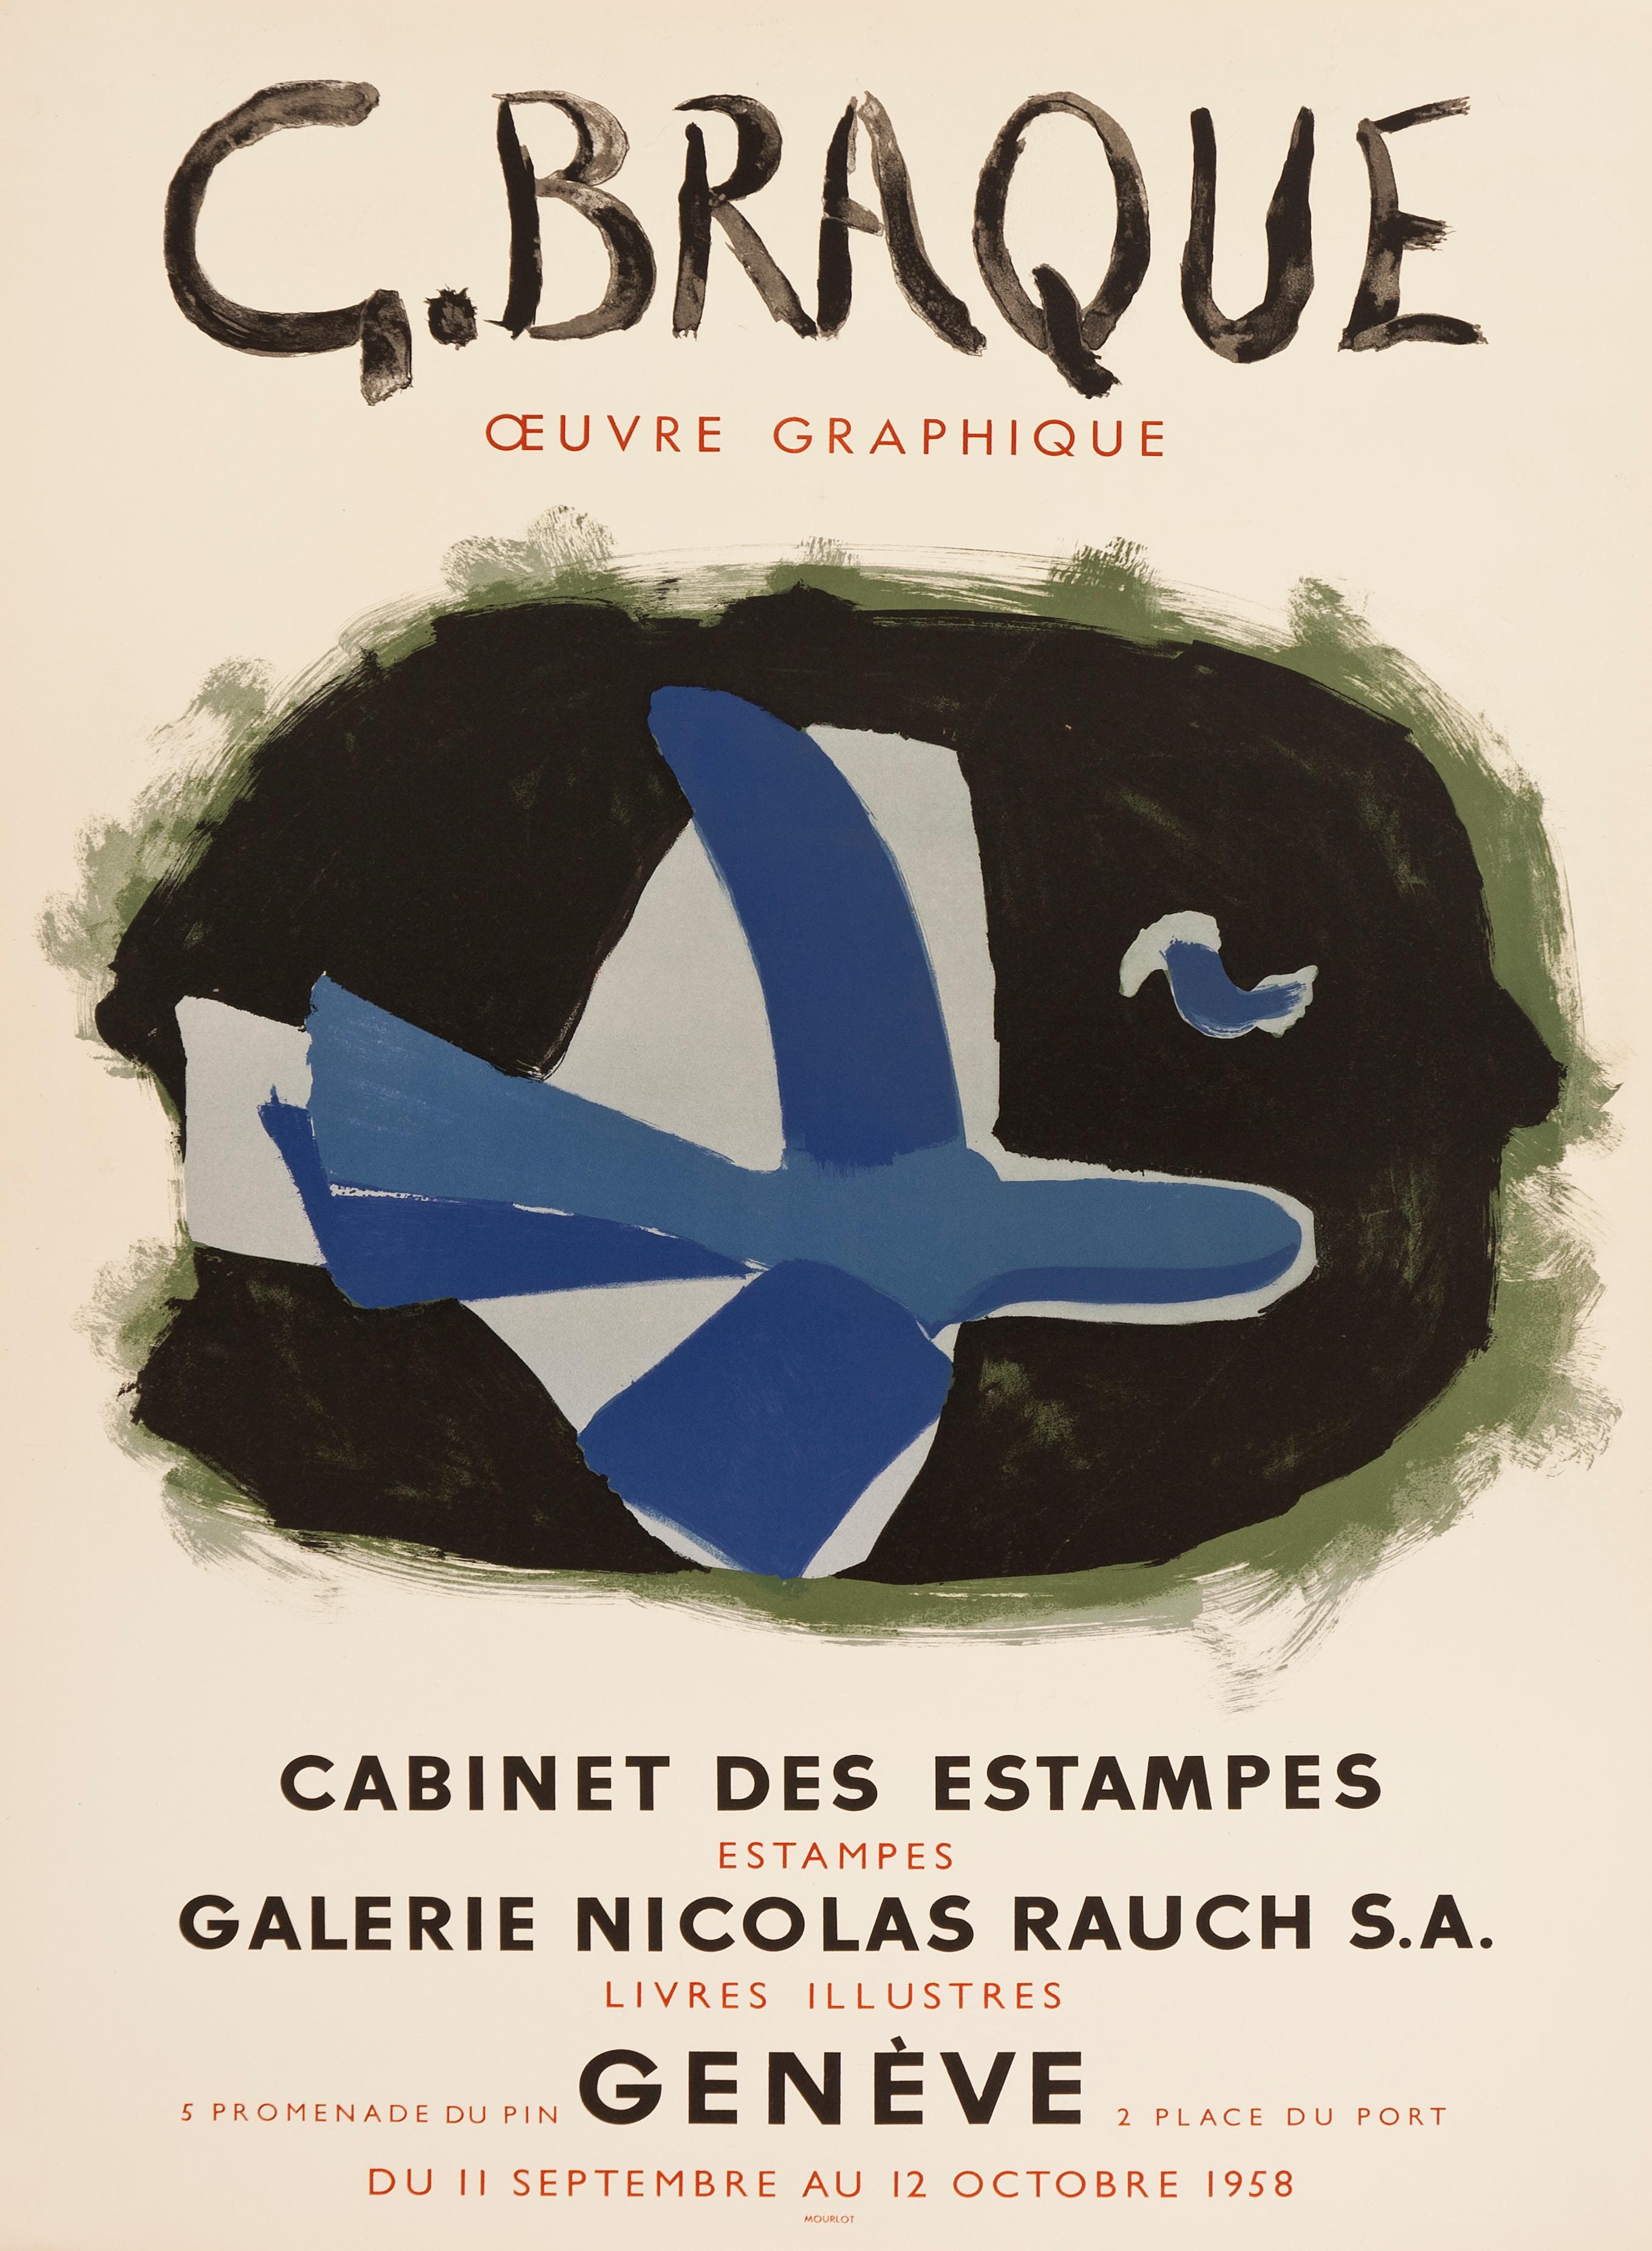 L'Oiseau des forêts - Galerie Nicolas Rauch nach Georges Braque, 1958